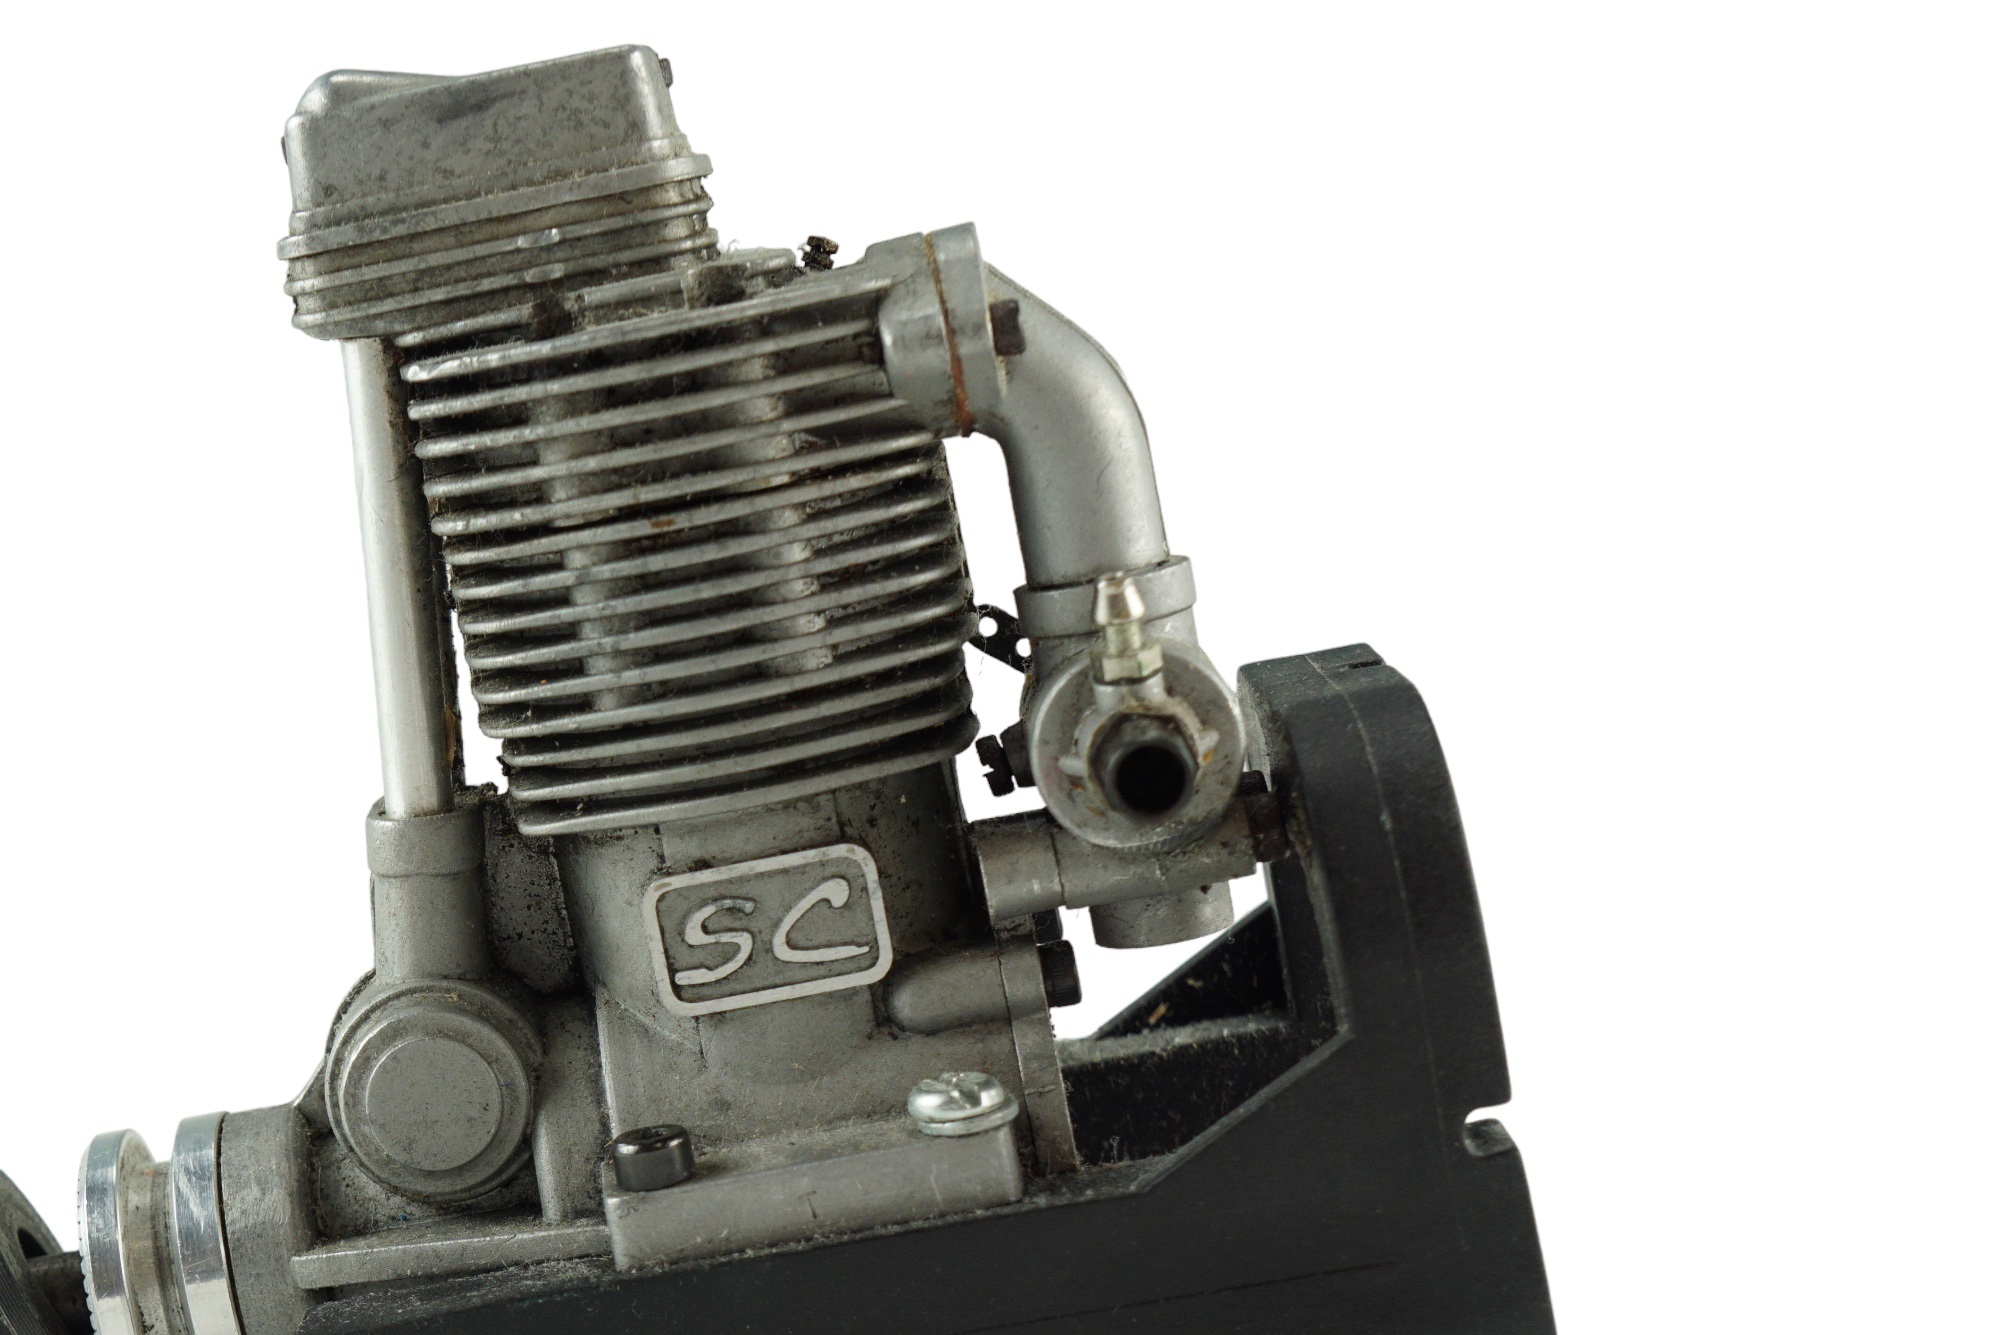 A Super Custom (SC) 91 four-stroke nitro engine, 15 x 13 x 6.5 cm - Image 6 of 6